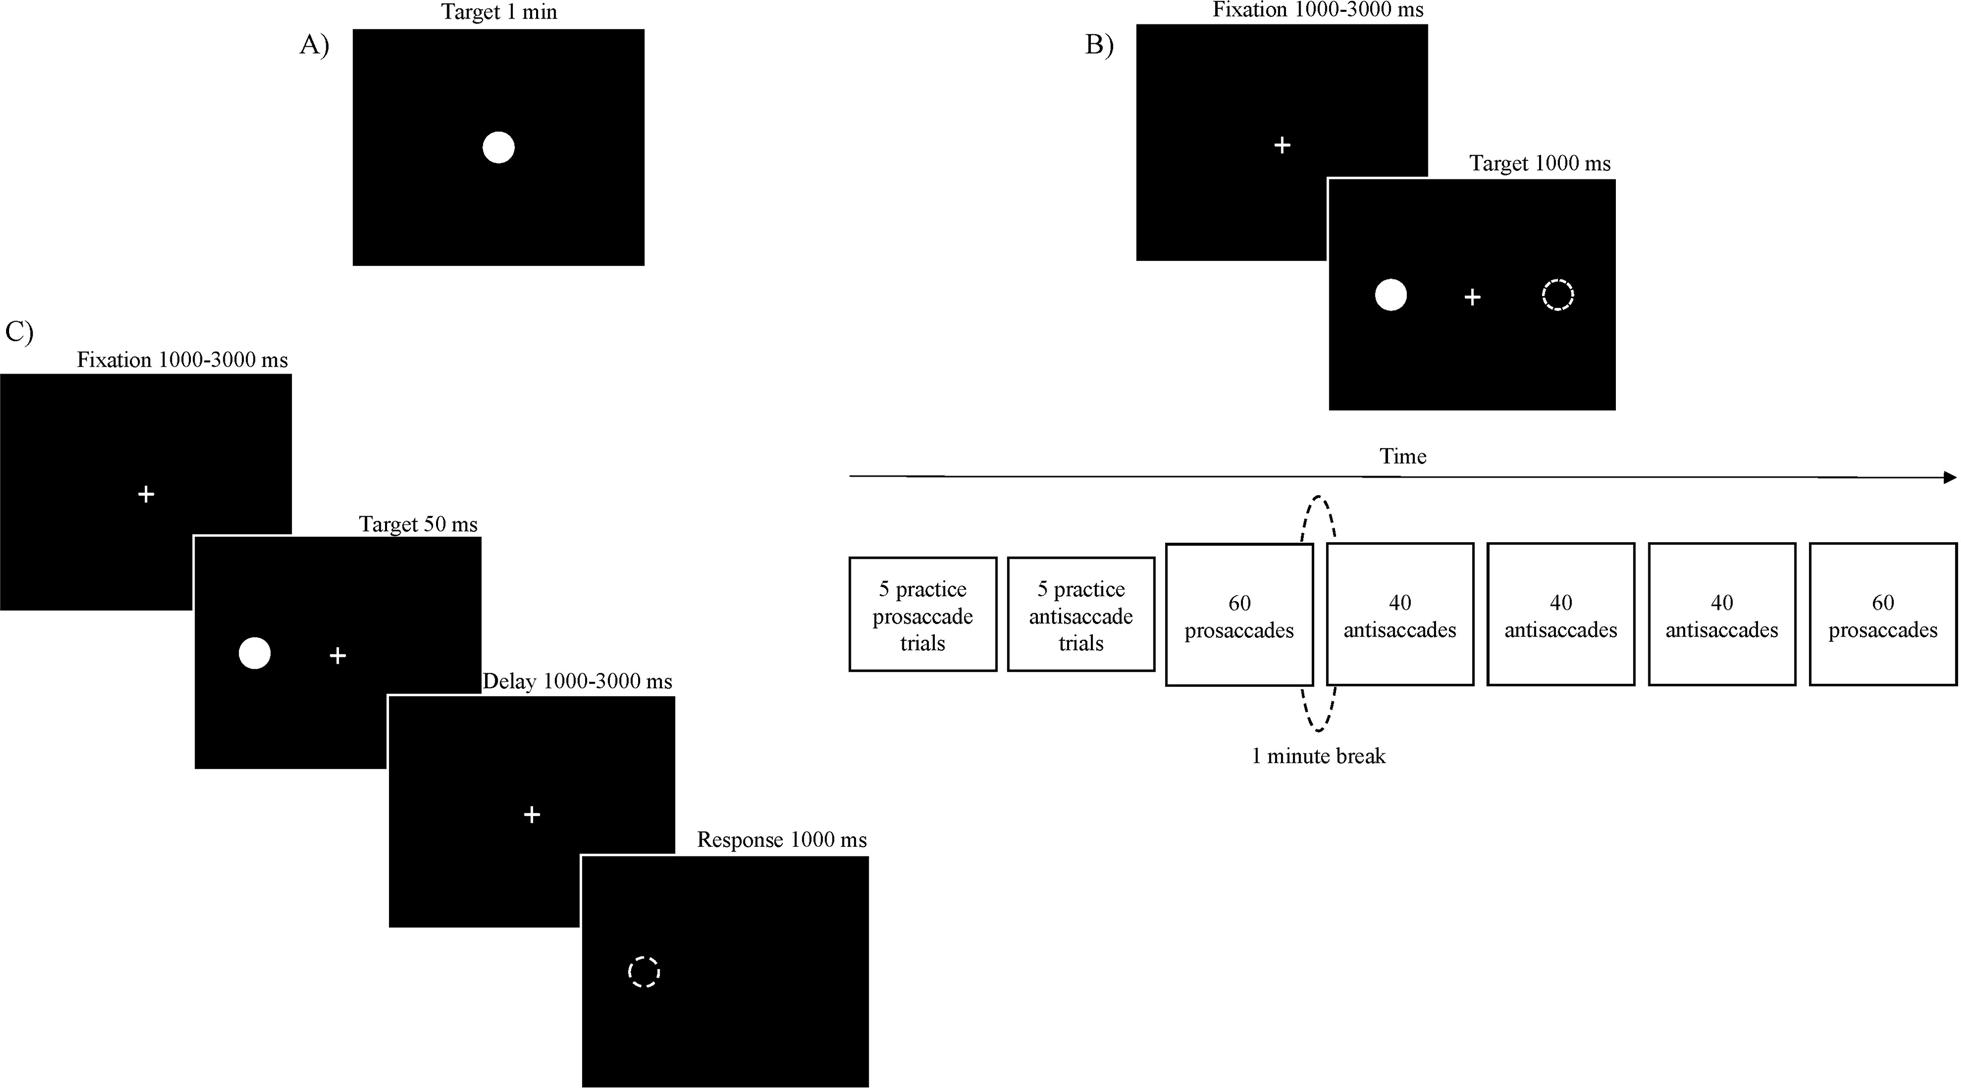 Representation of Eye-tracking tasks: Fixation task, Prosaccade/Antisaccade task, Memory-guided task